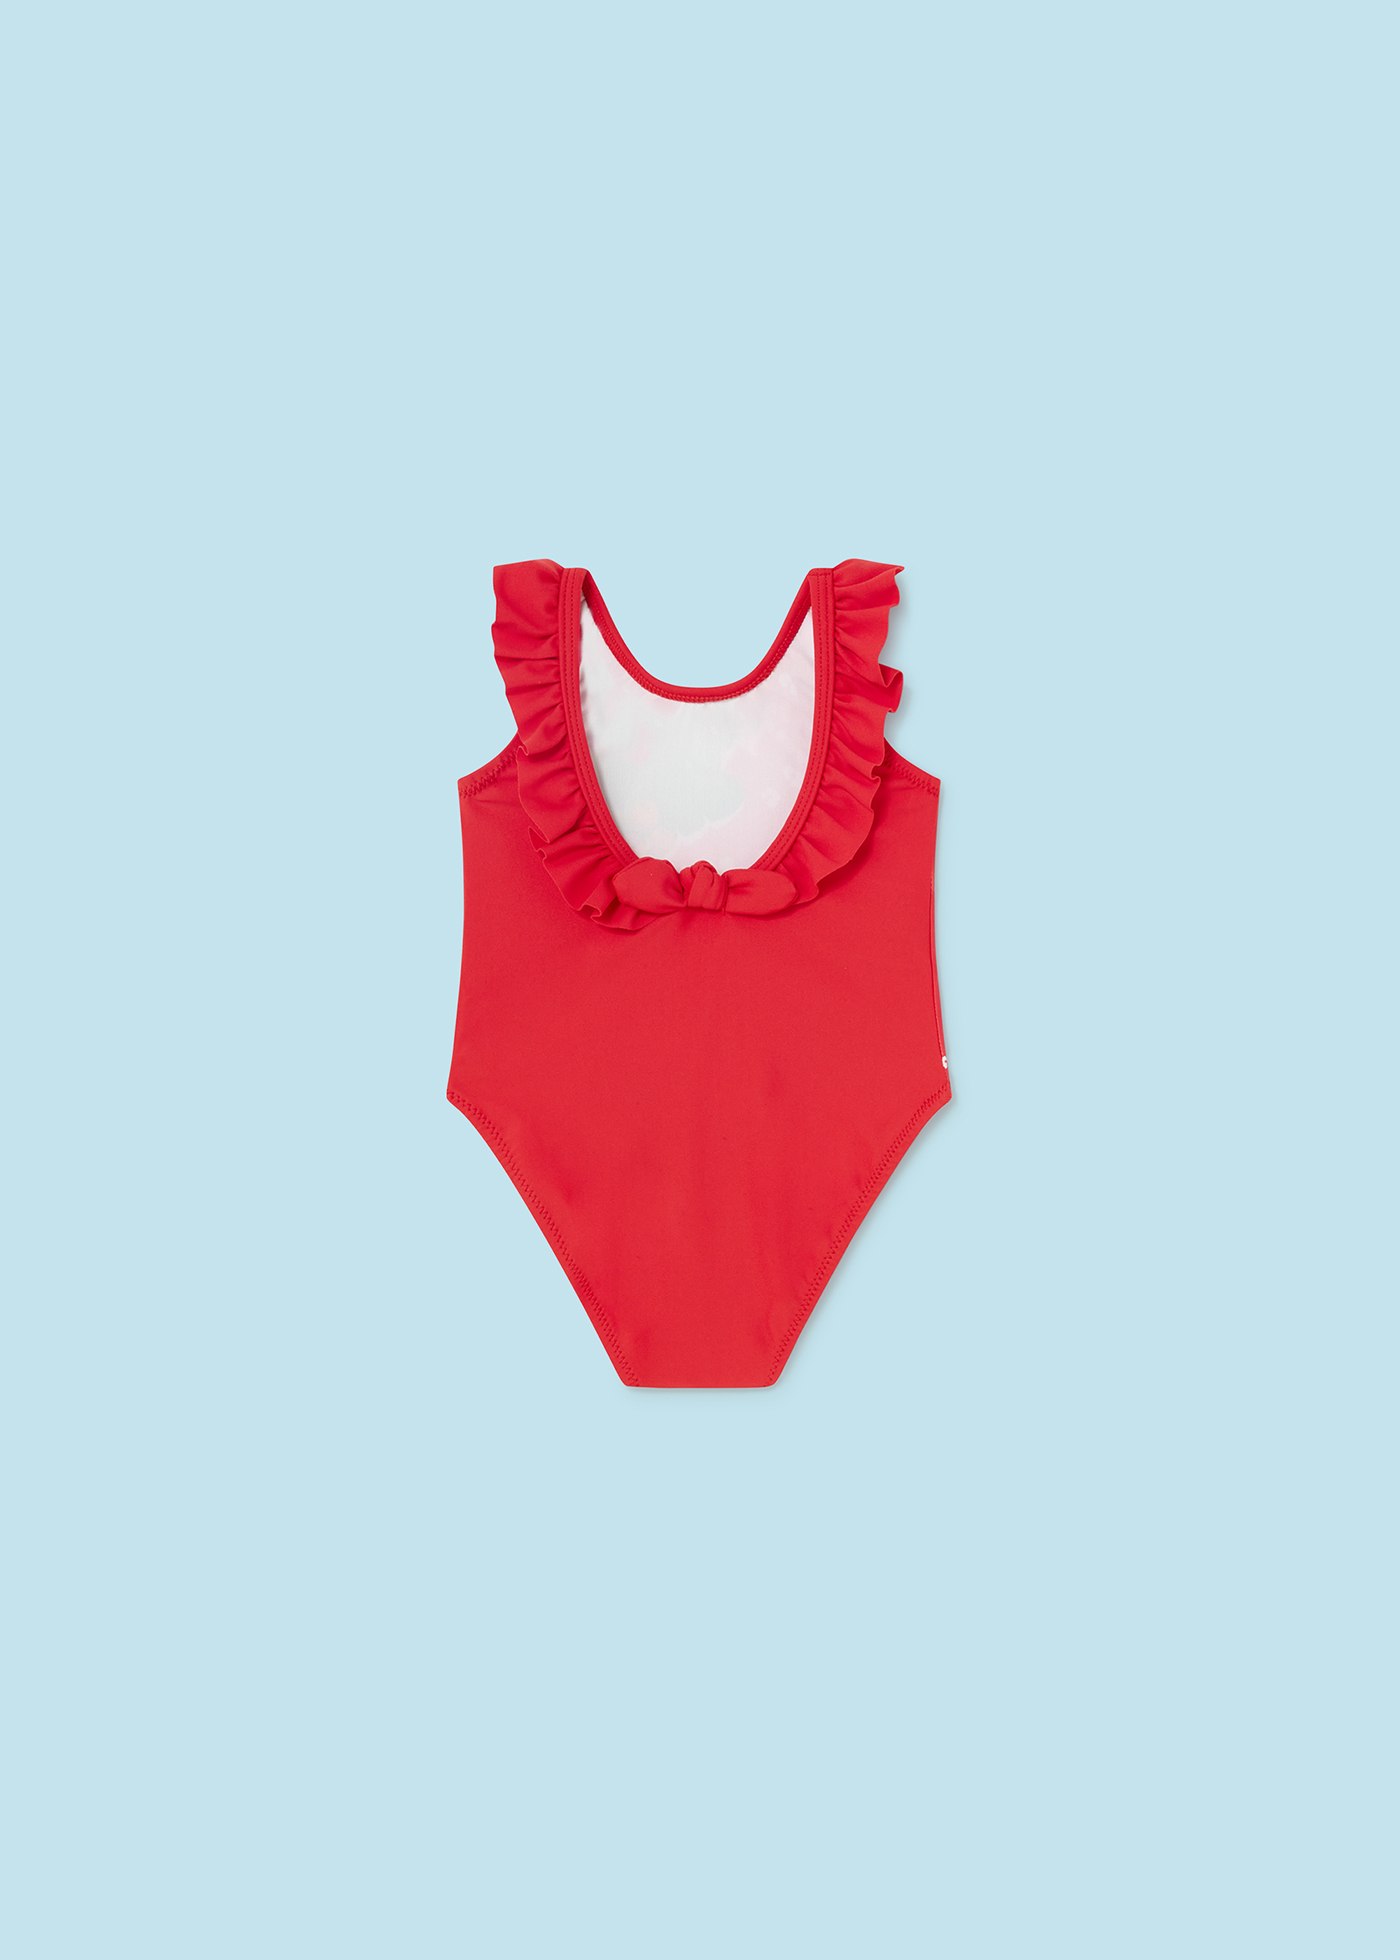 Baby printed swimsuit ruffles